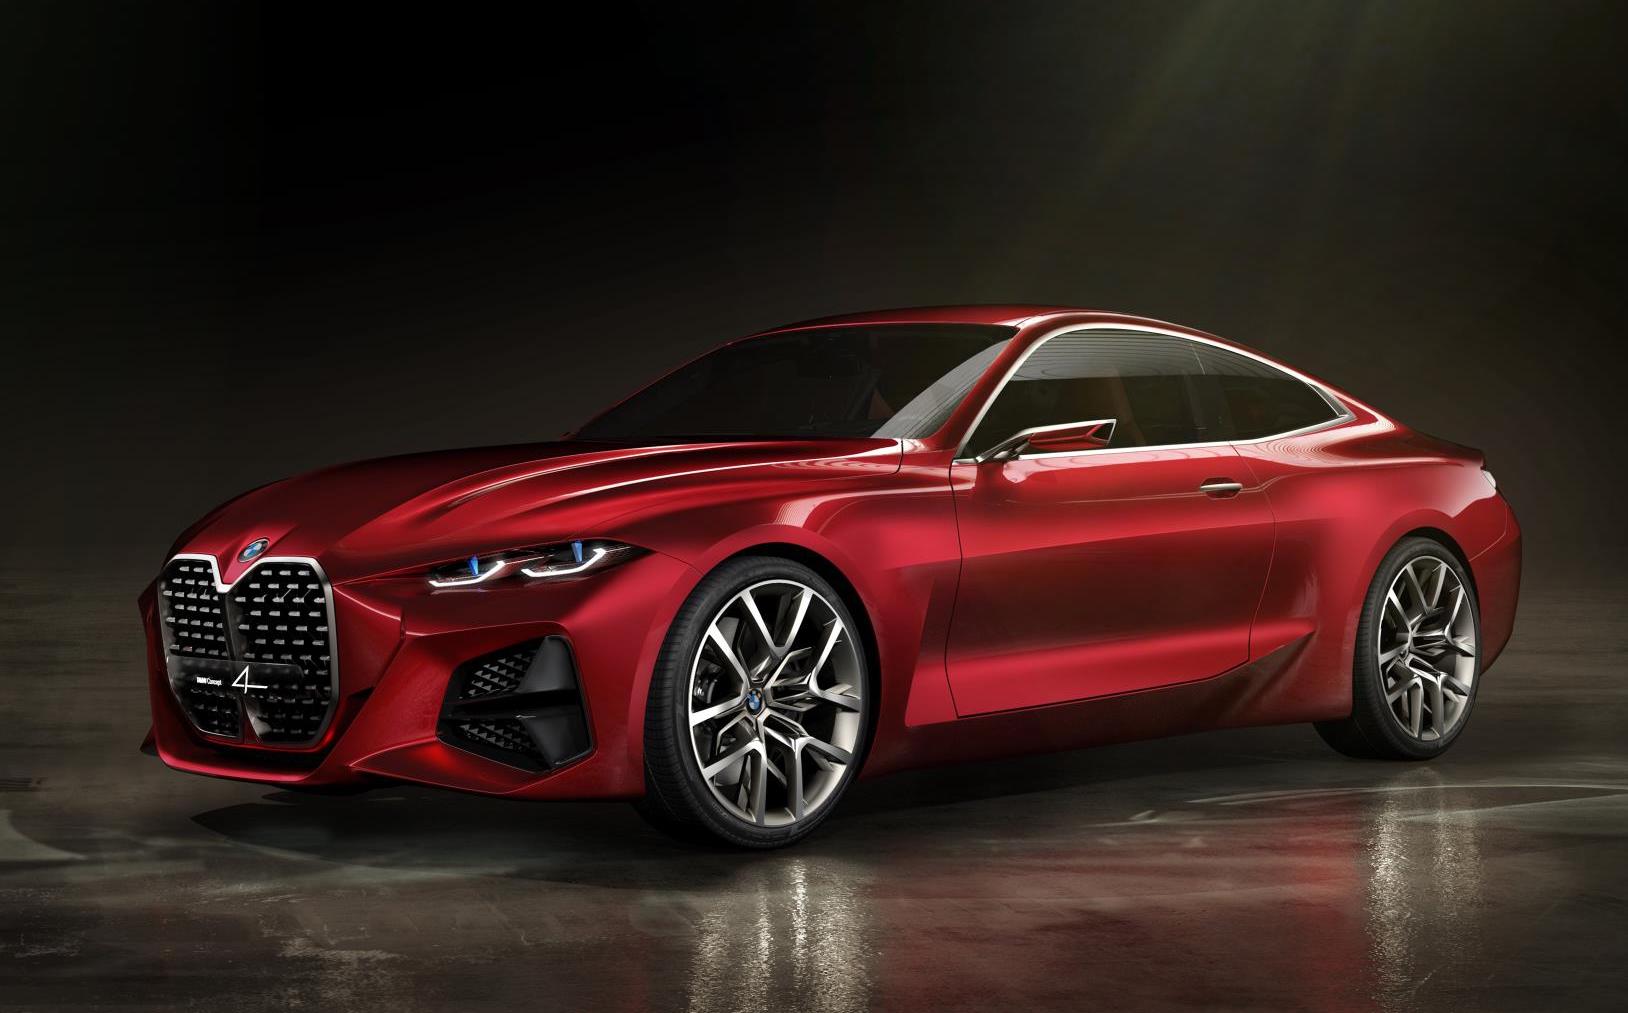 BMW Concept 4 revealed, previews 2020 4 Series